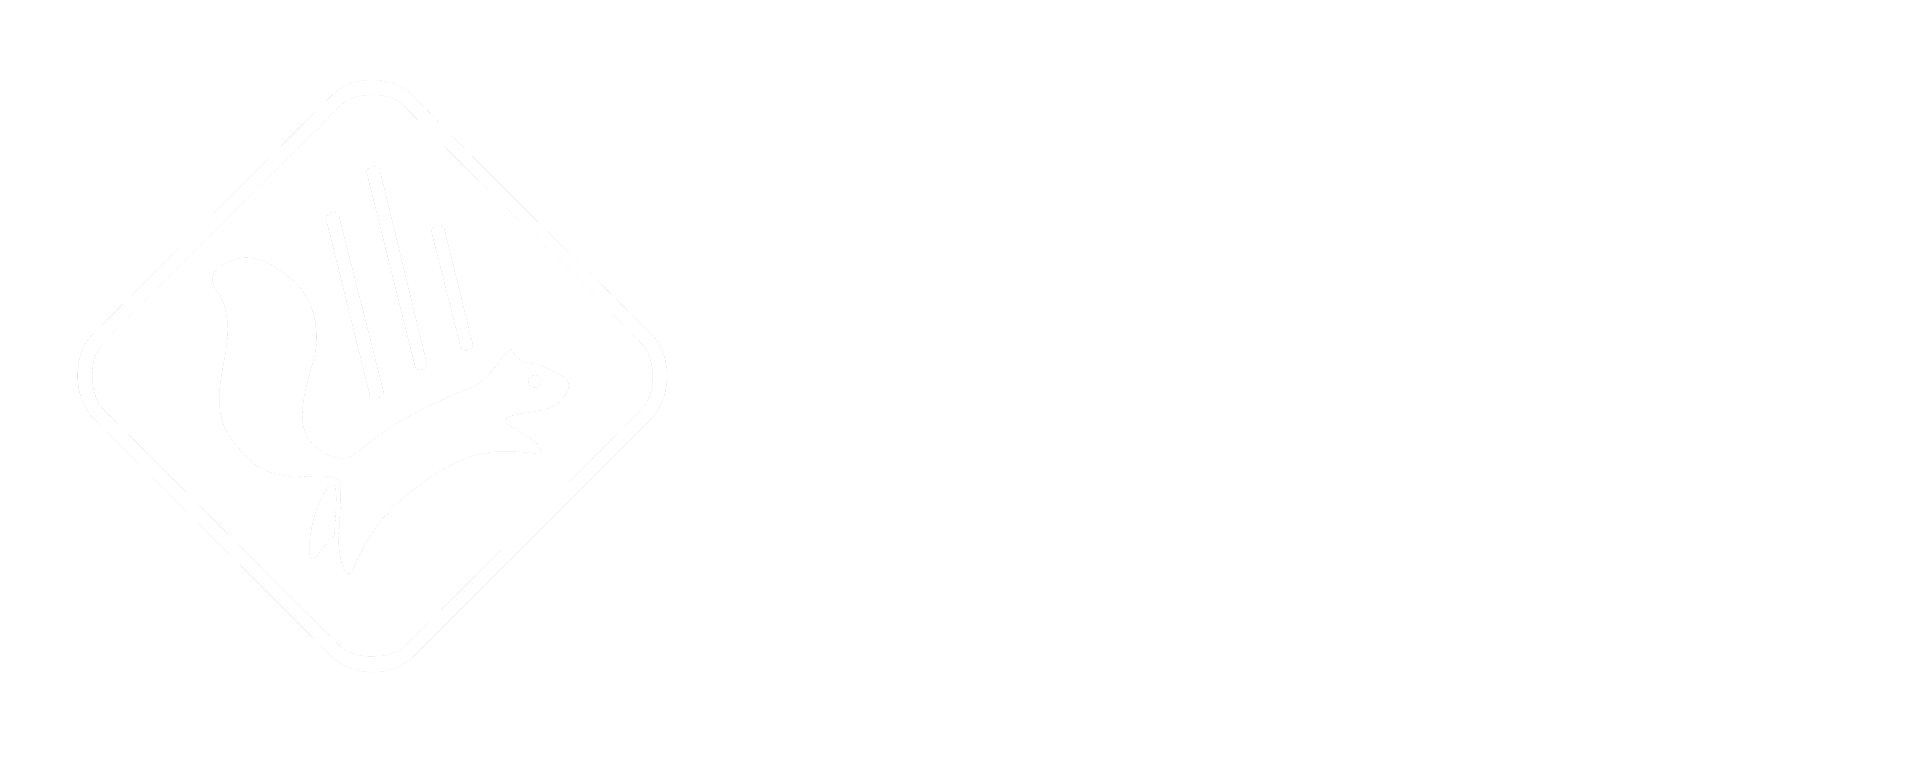 Falling Squirrel